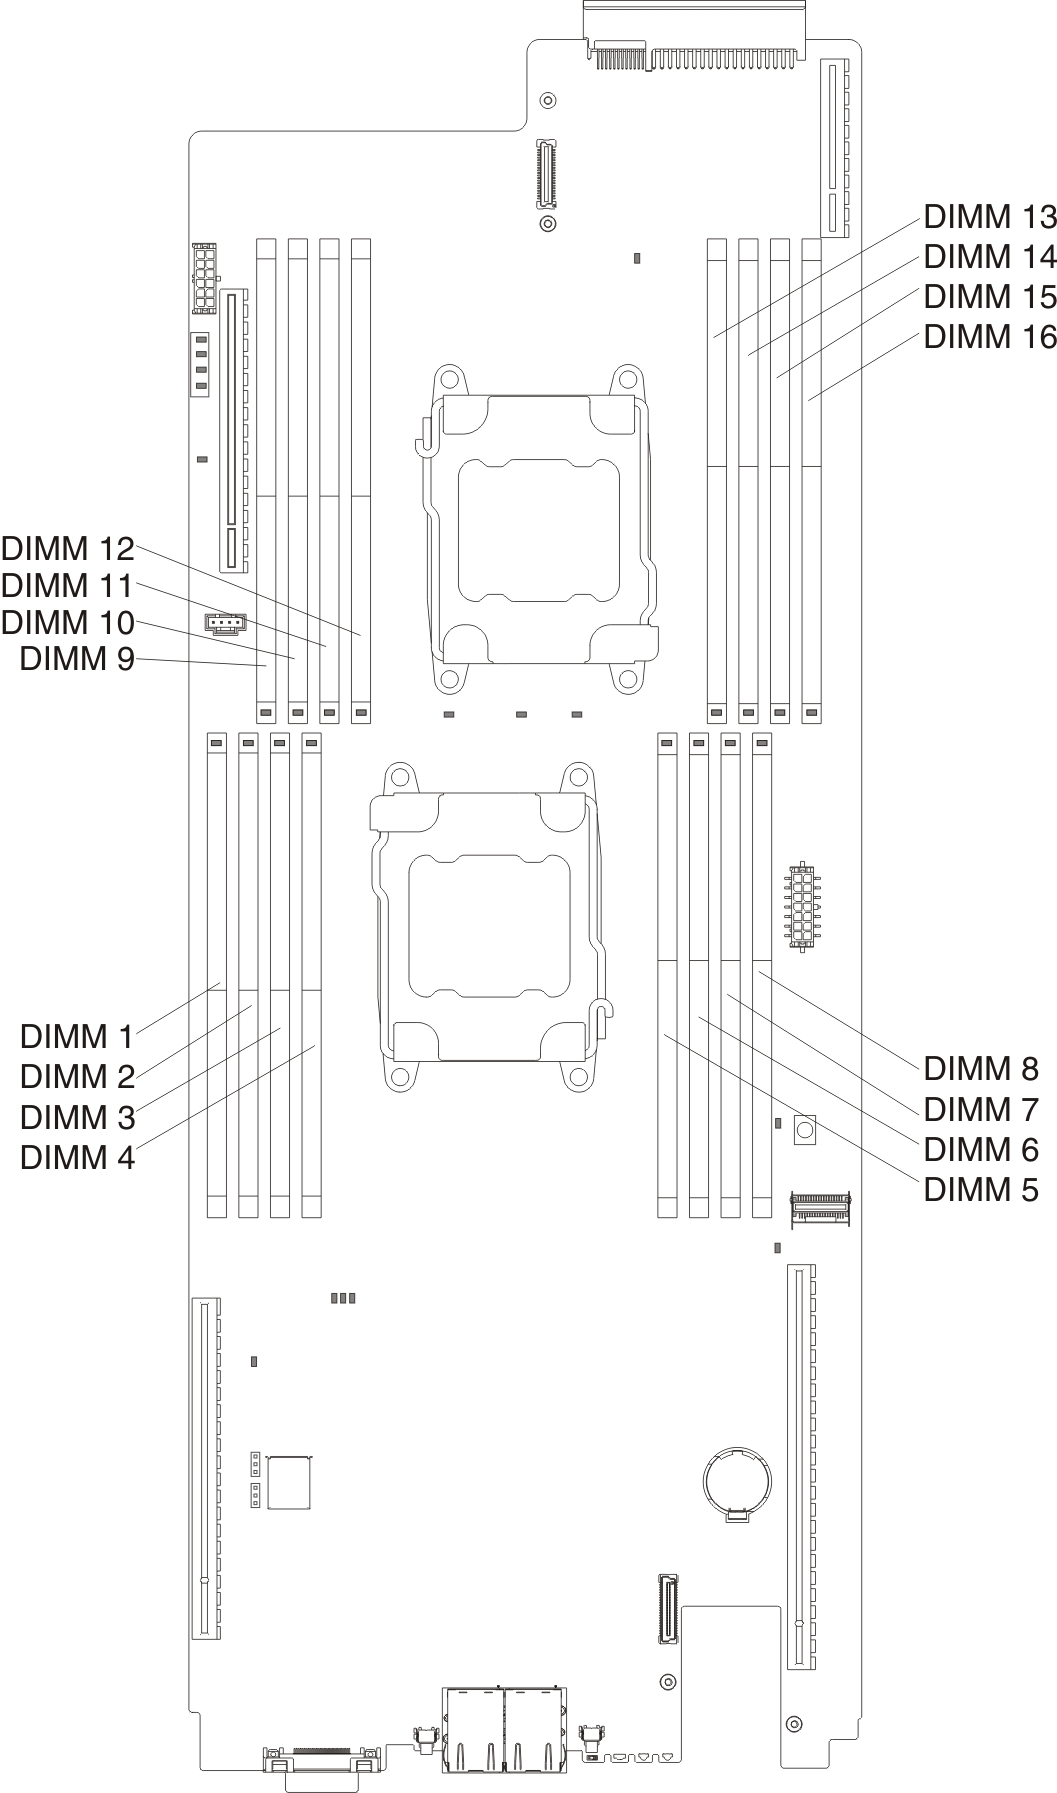 Position der DIMM-Steckplätze